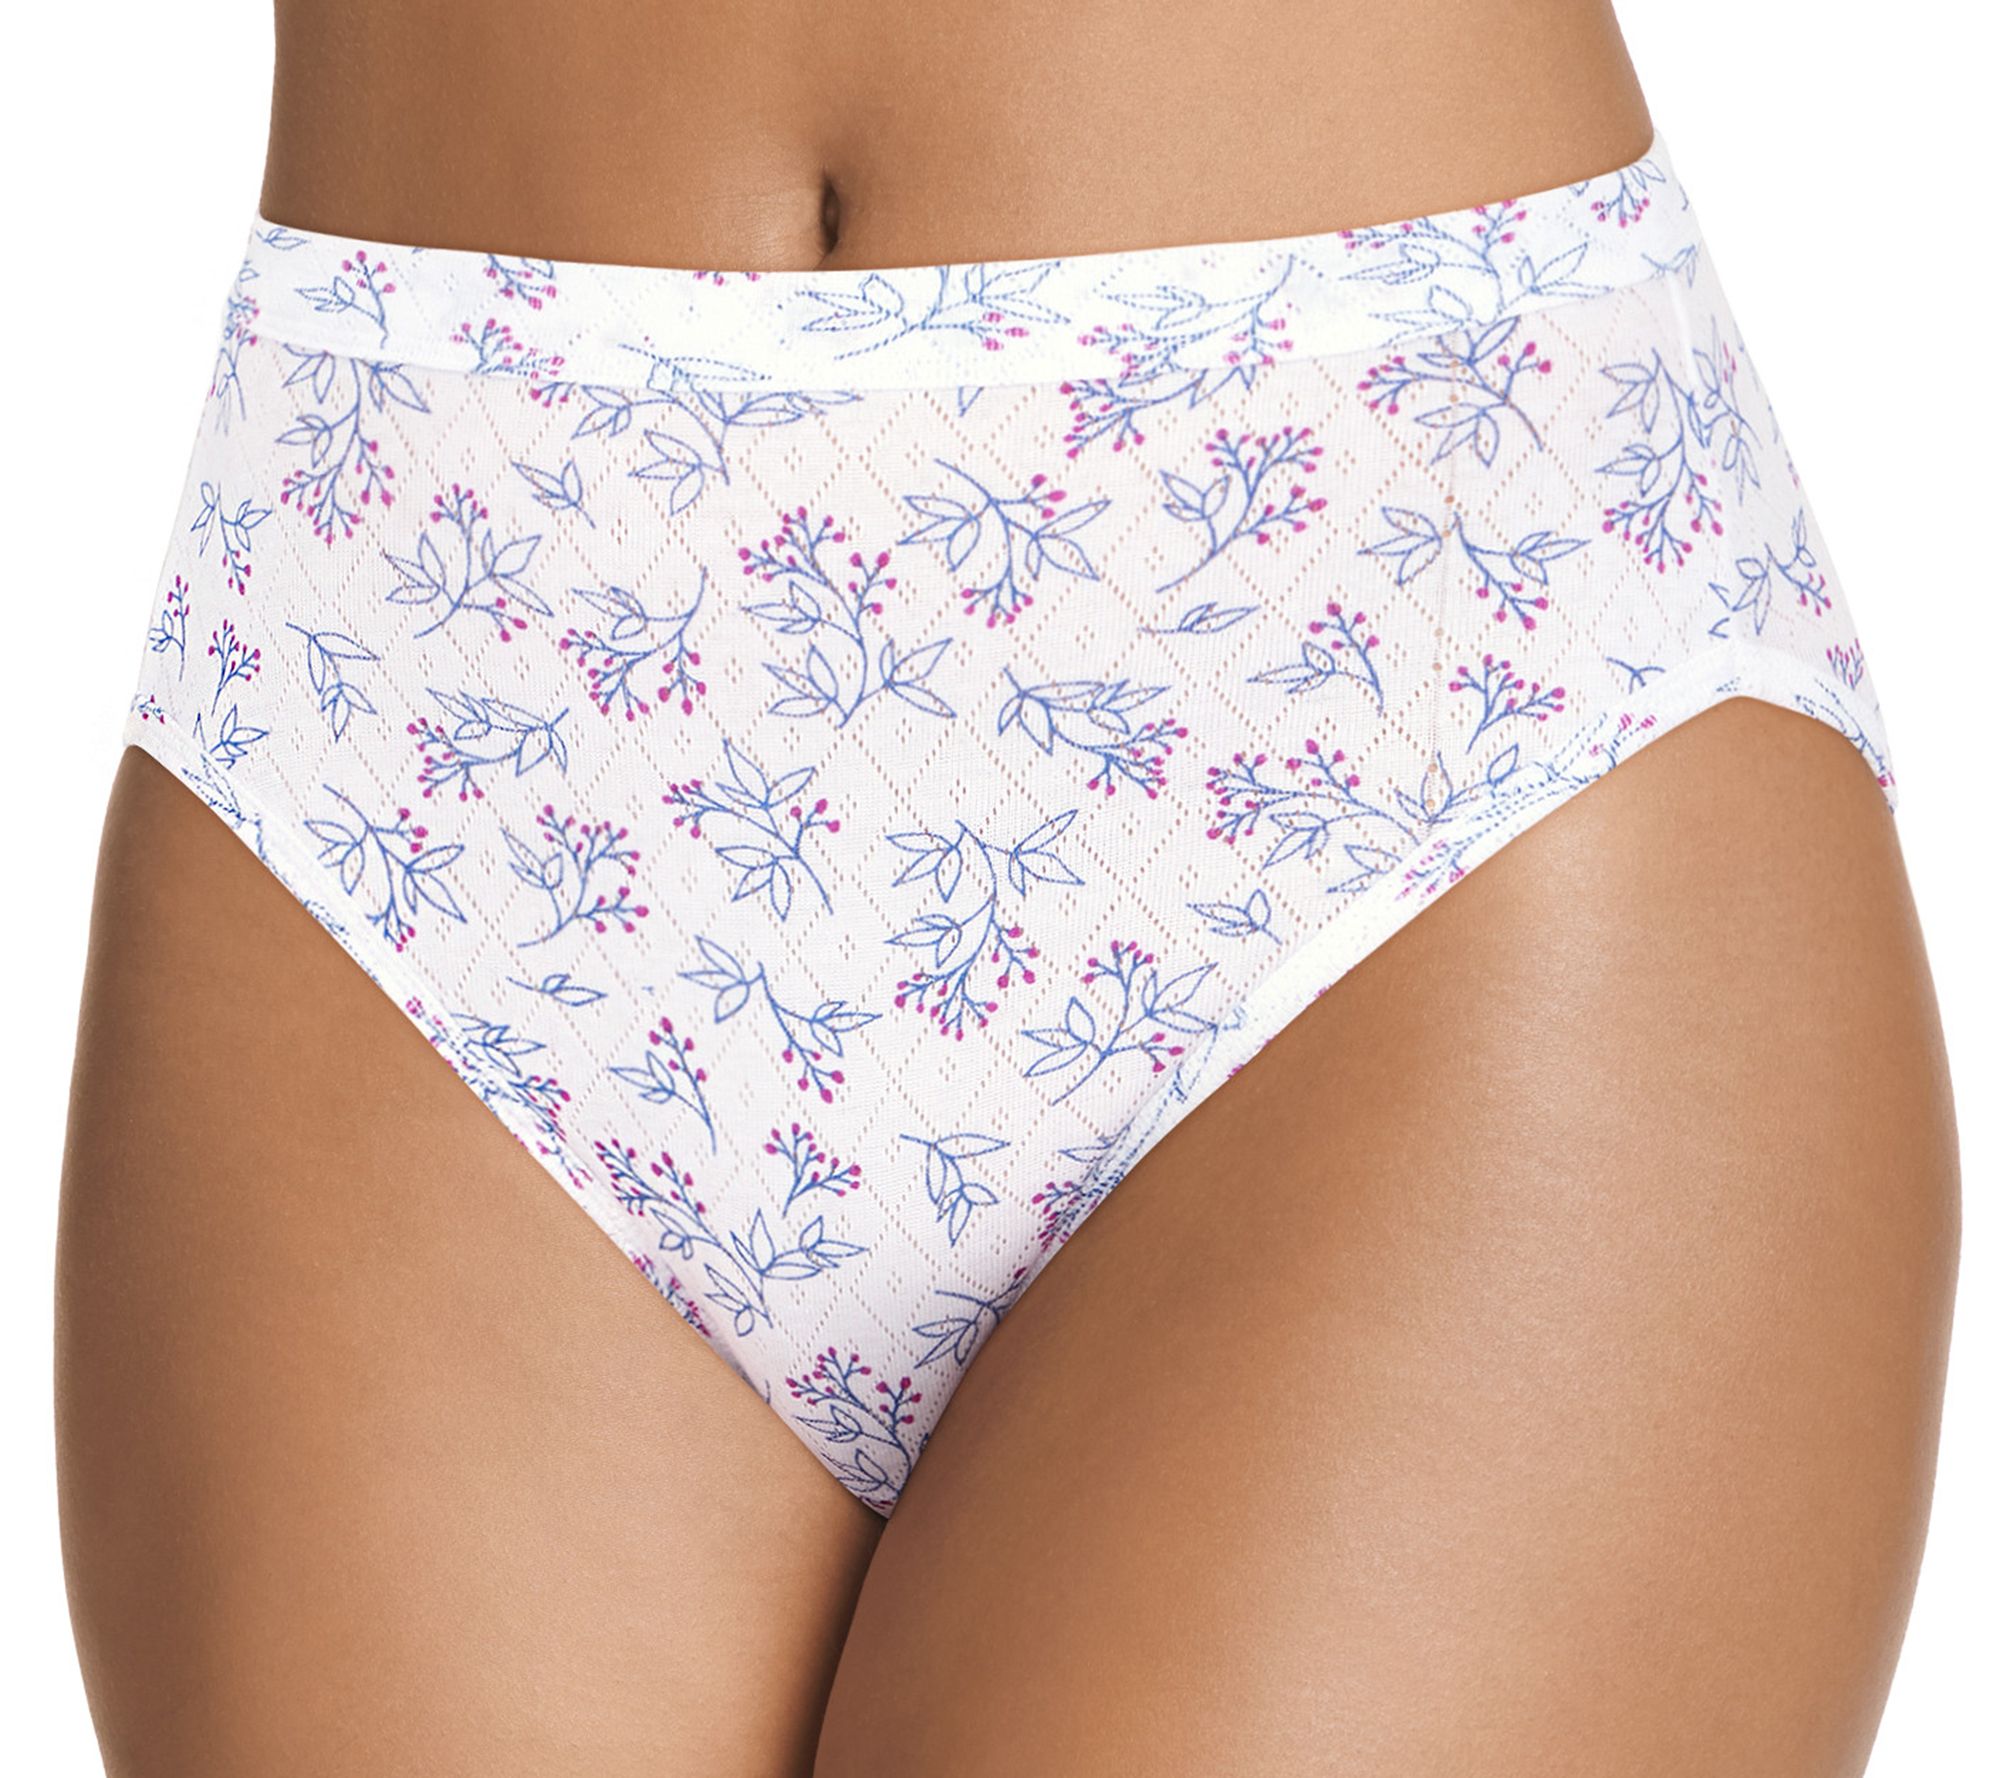 New Jockey Women's size 9 Underwear Elance Cotton Bikini 3 Pack Blues Dots